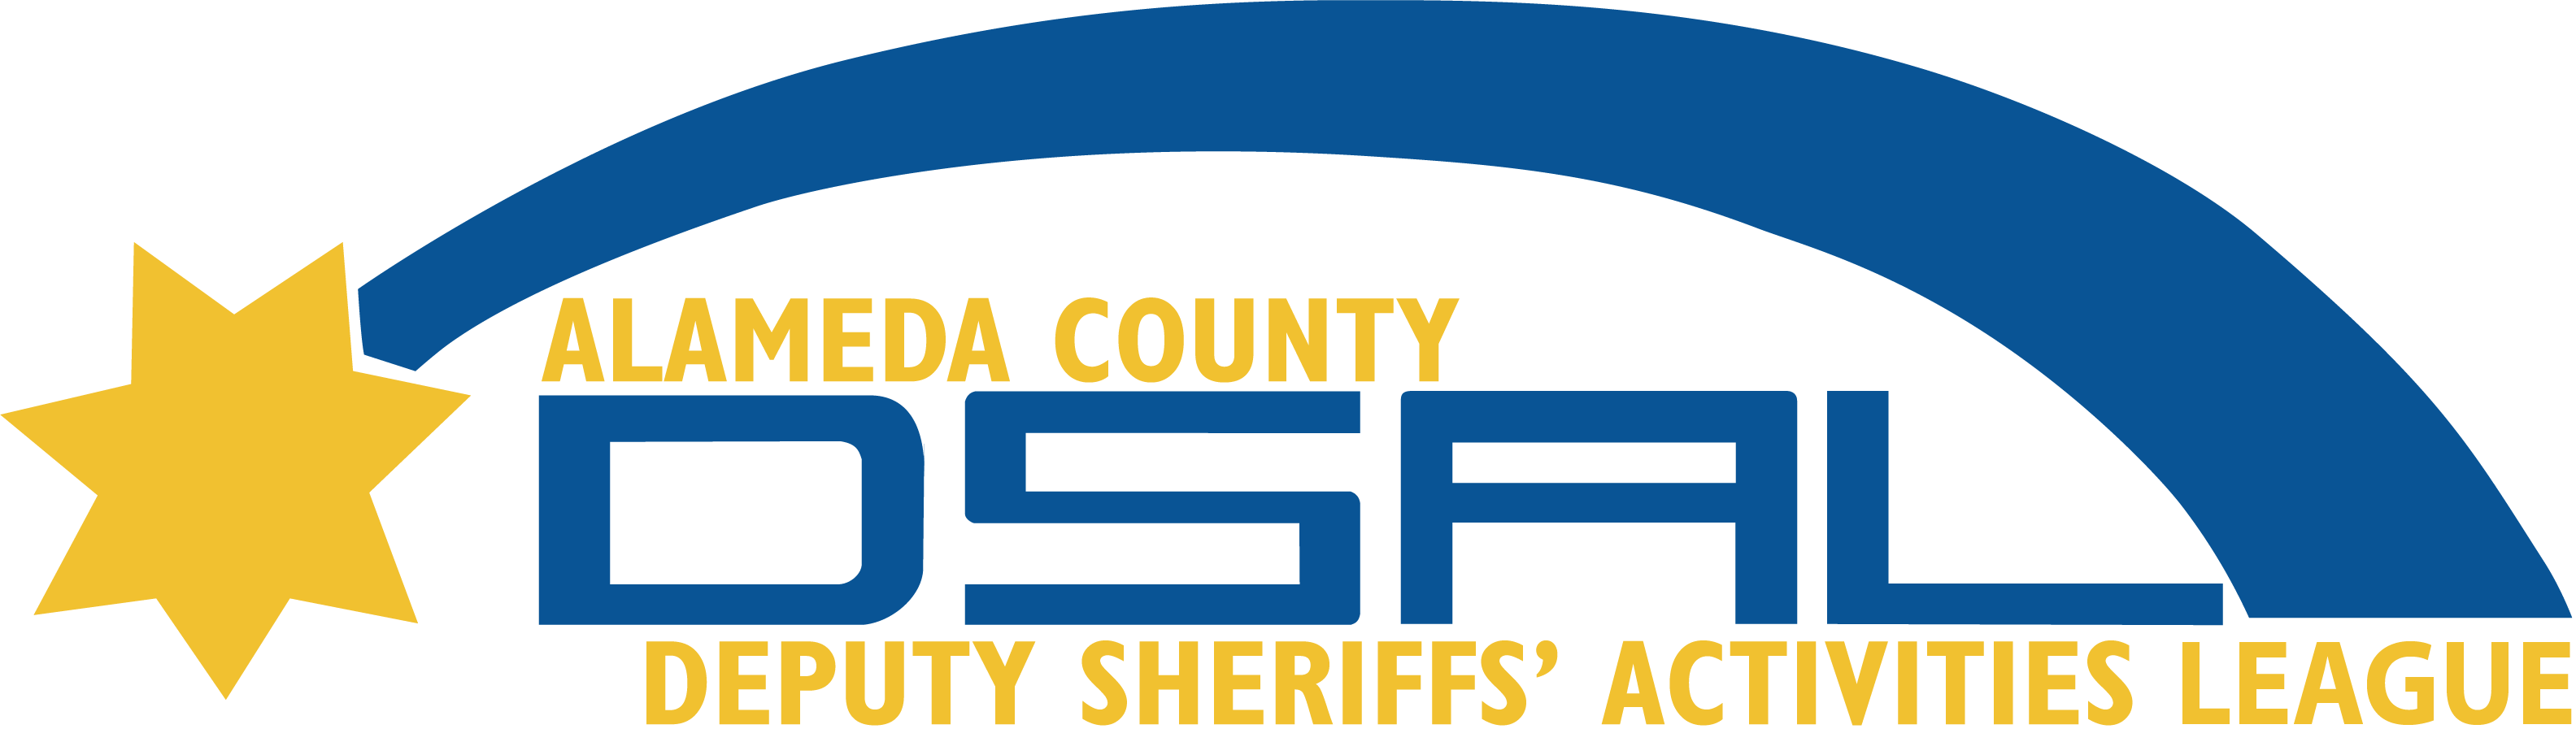 Alameda County Deputy Sheriffs' Activities League logo